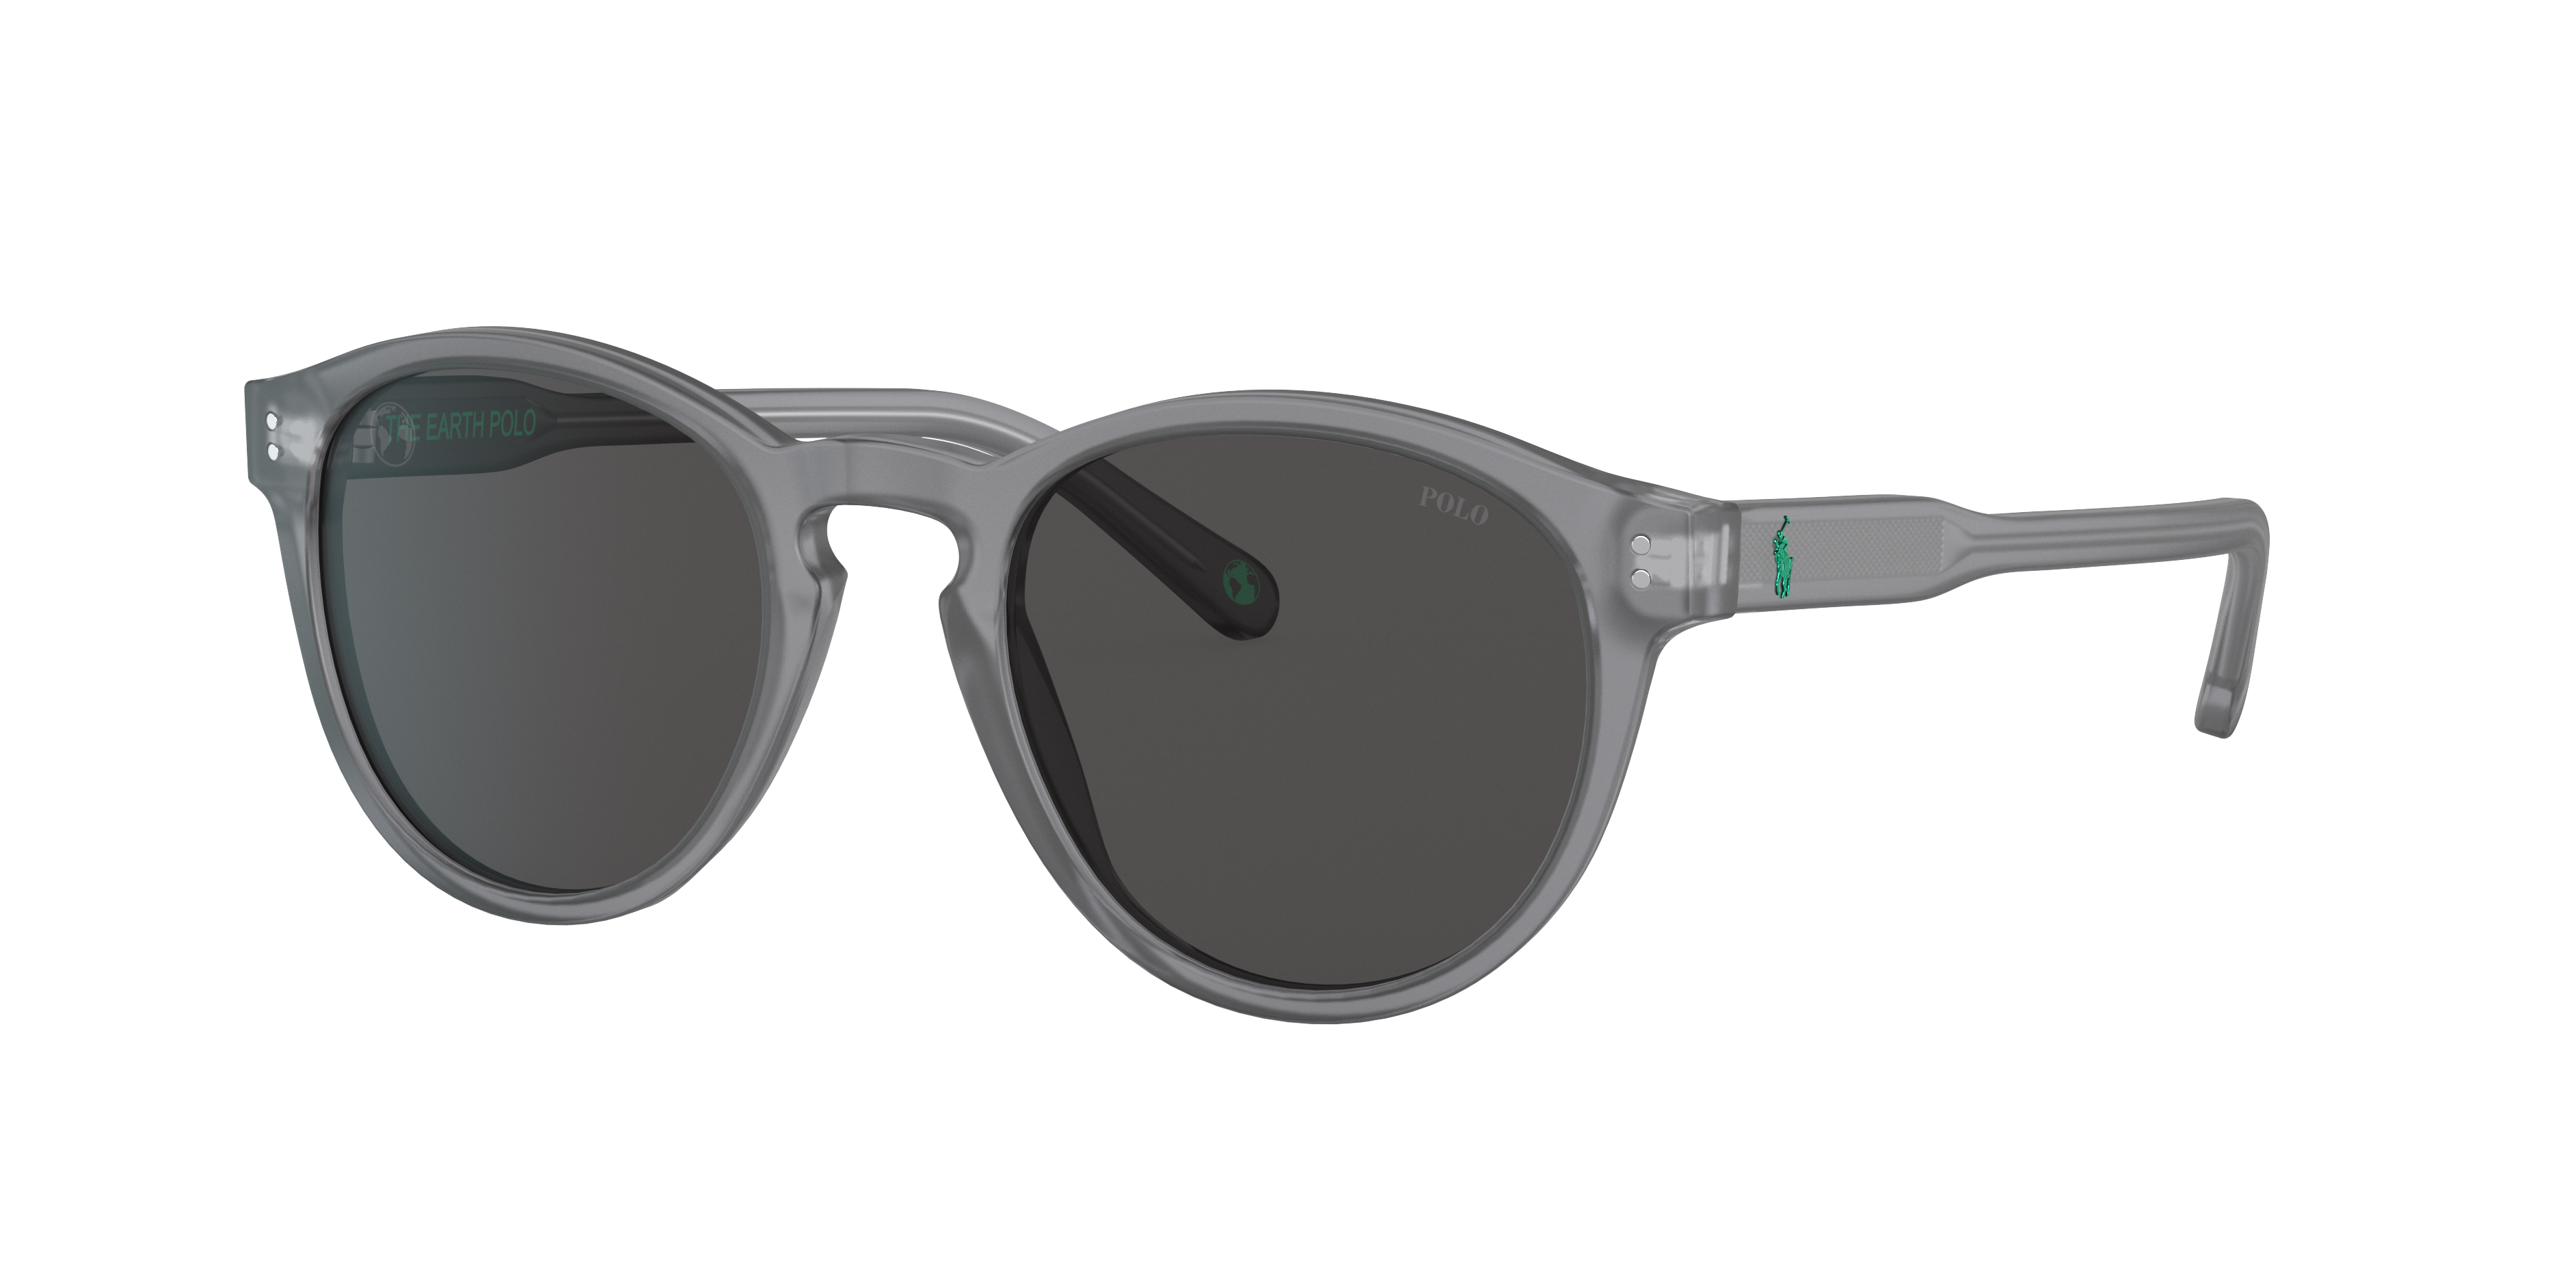 Polo Ralph Lauren Man Sunglasses Ph4172 In Dark Grey